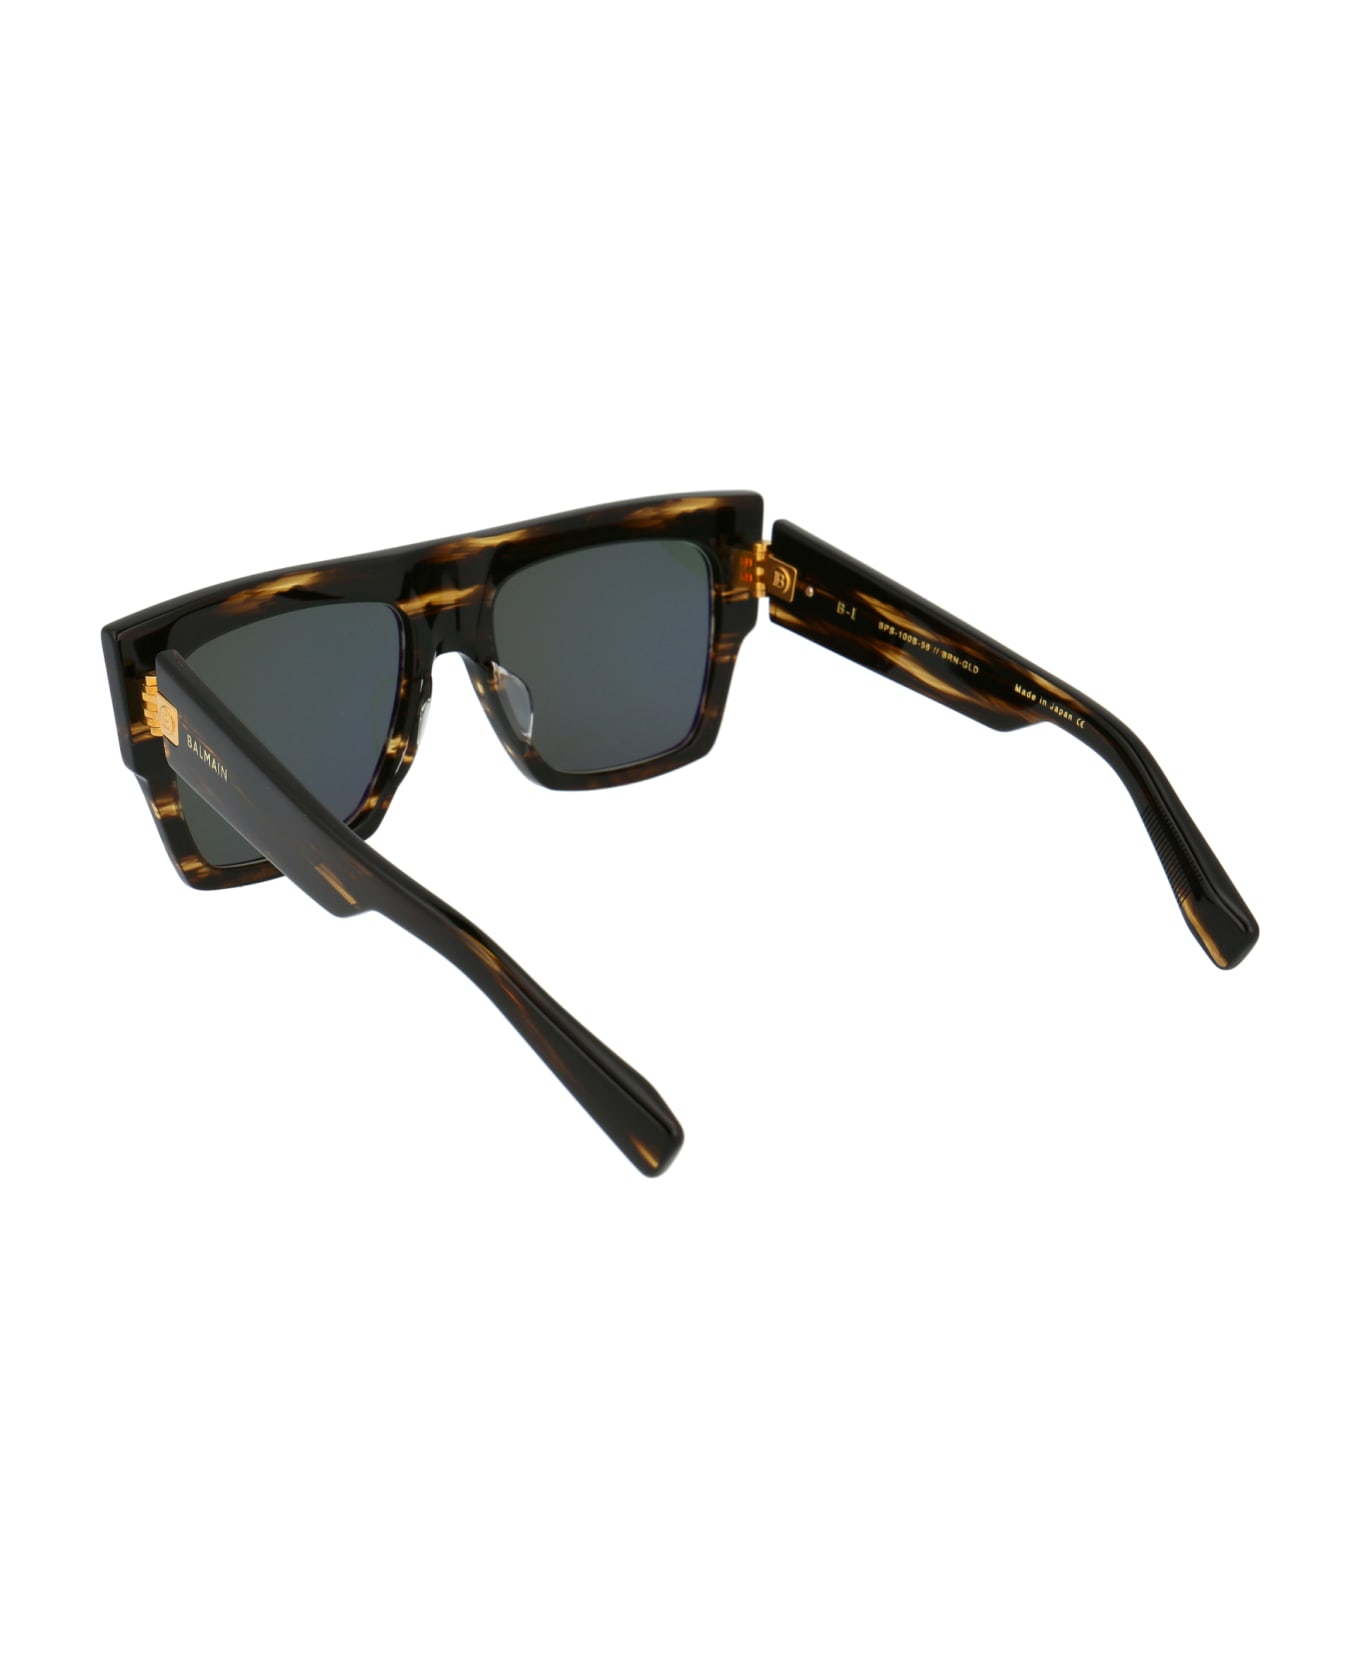 Balmain B-i Sunglasses - DARK BROWN SWIRL GOLD W/G 15 AR サングラス